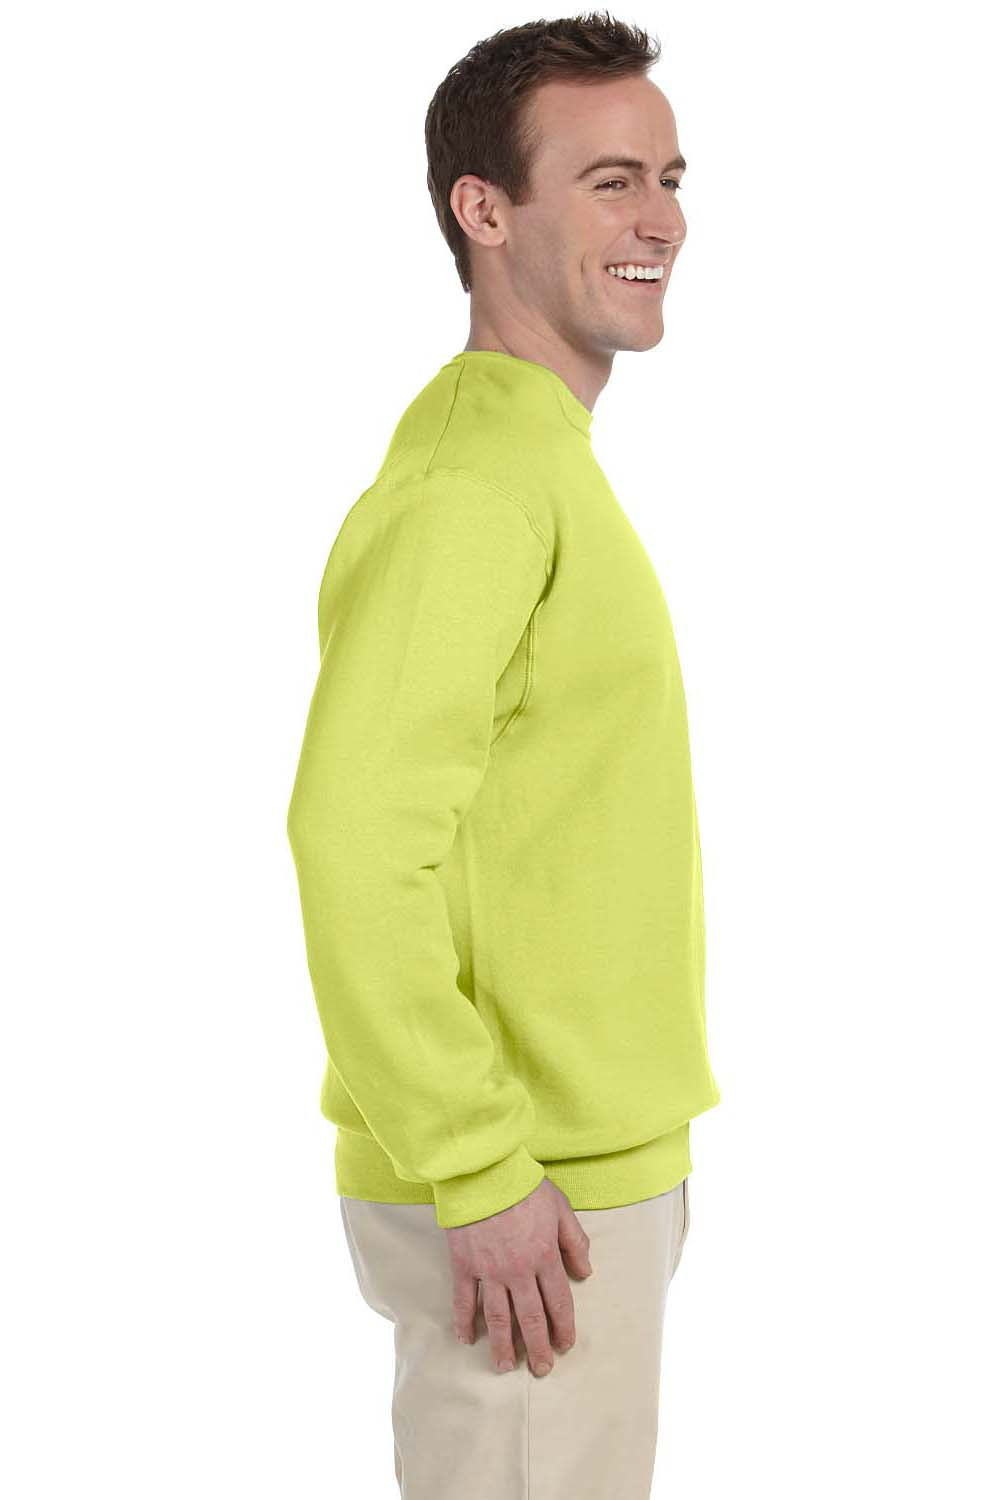 Jerzees 562 Mens NuBlend Fleece Crewneck Sweatshirt Safety Green Side